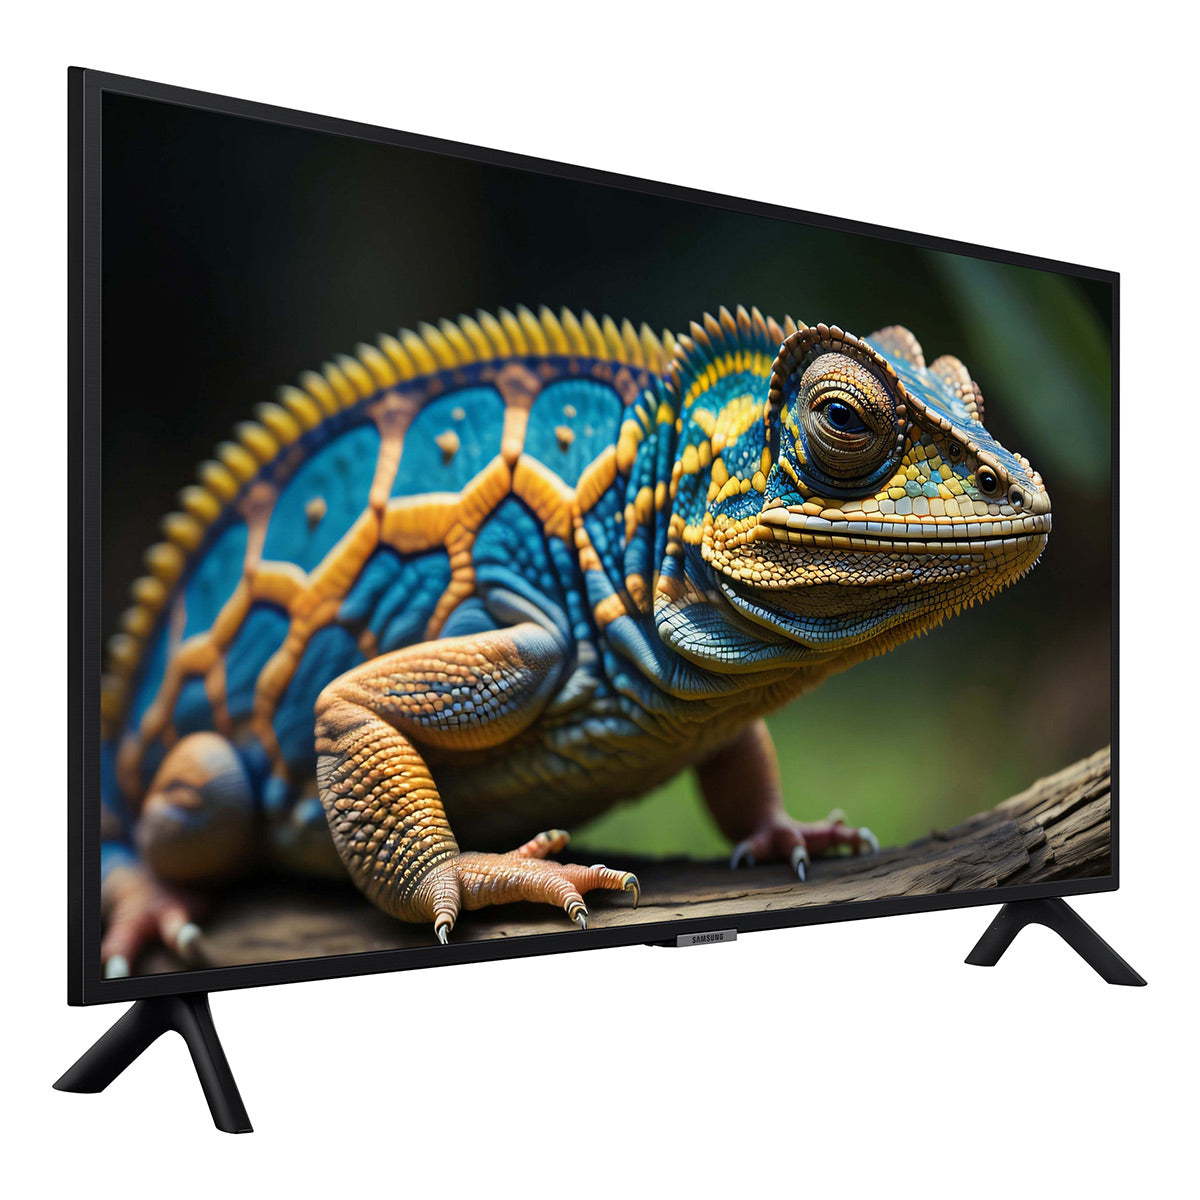 Samsung QN32Q60DA 32" 4K QLED Smart TV (2024)